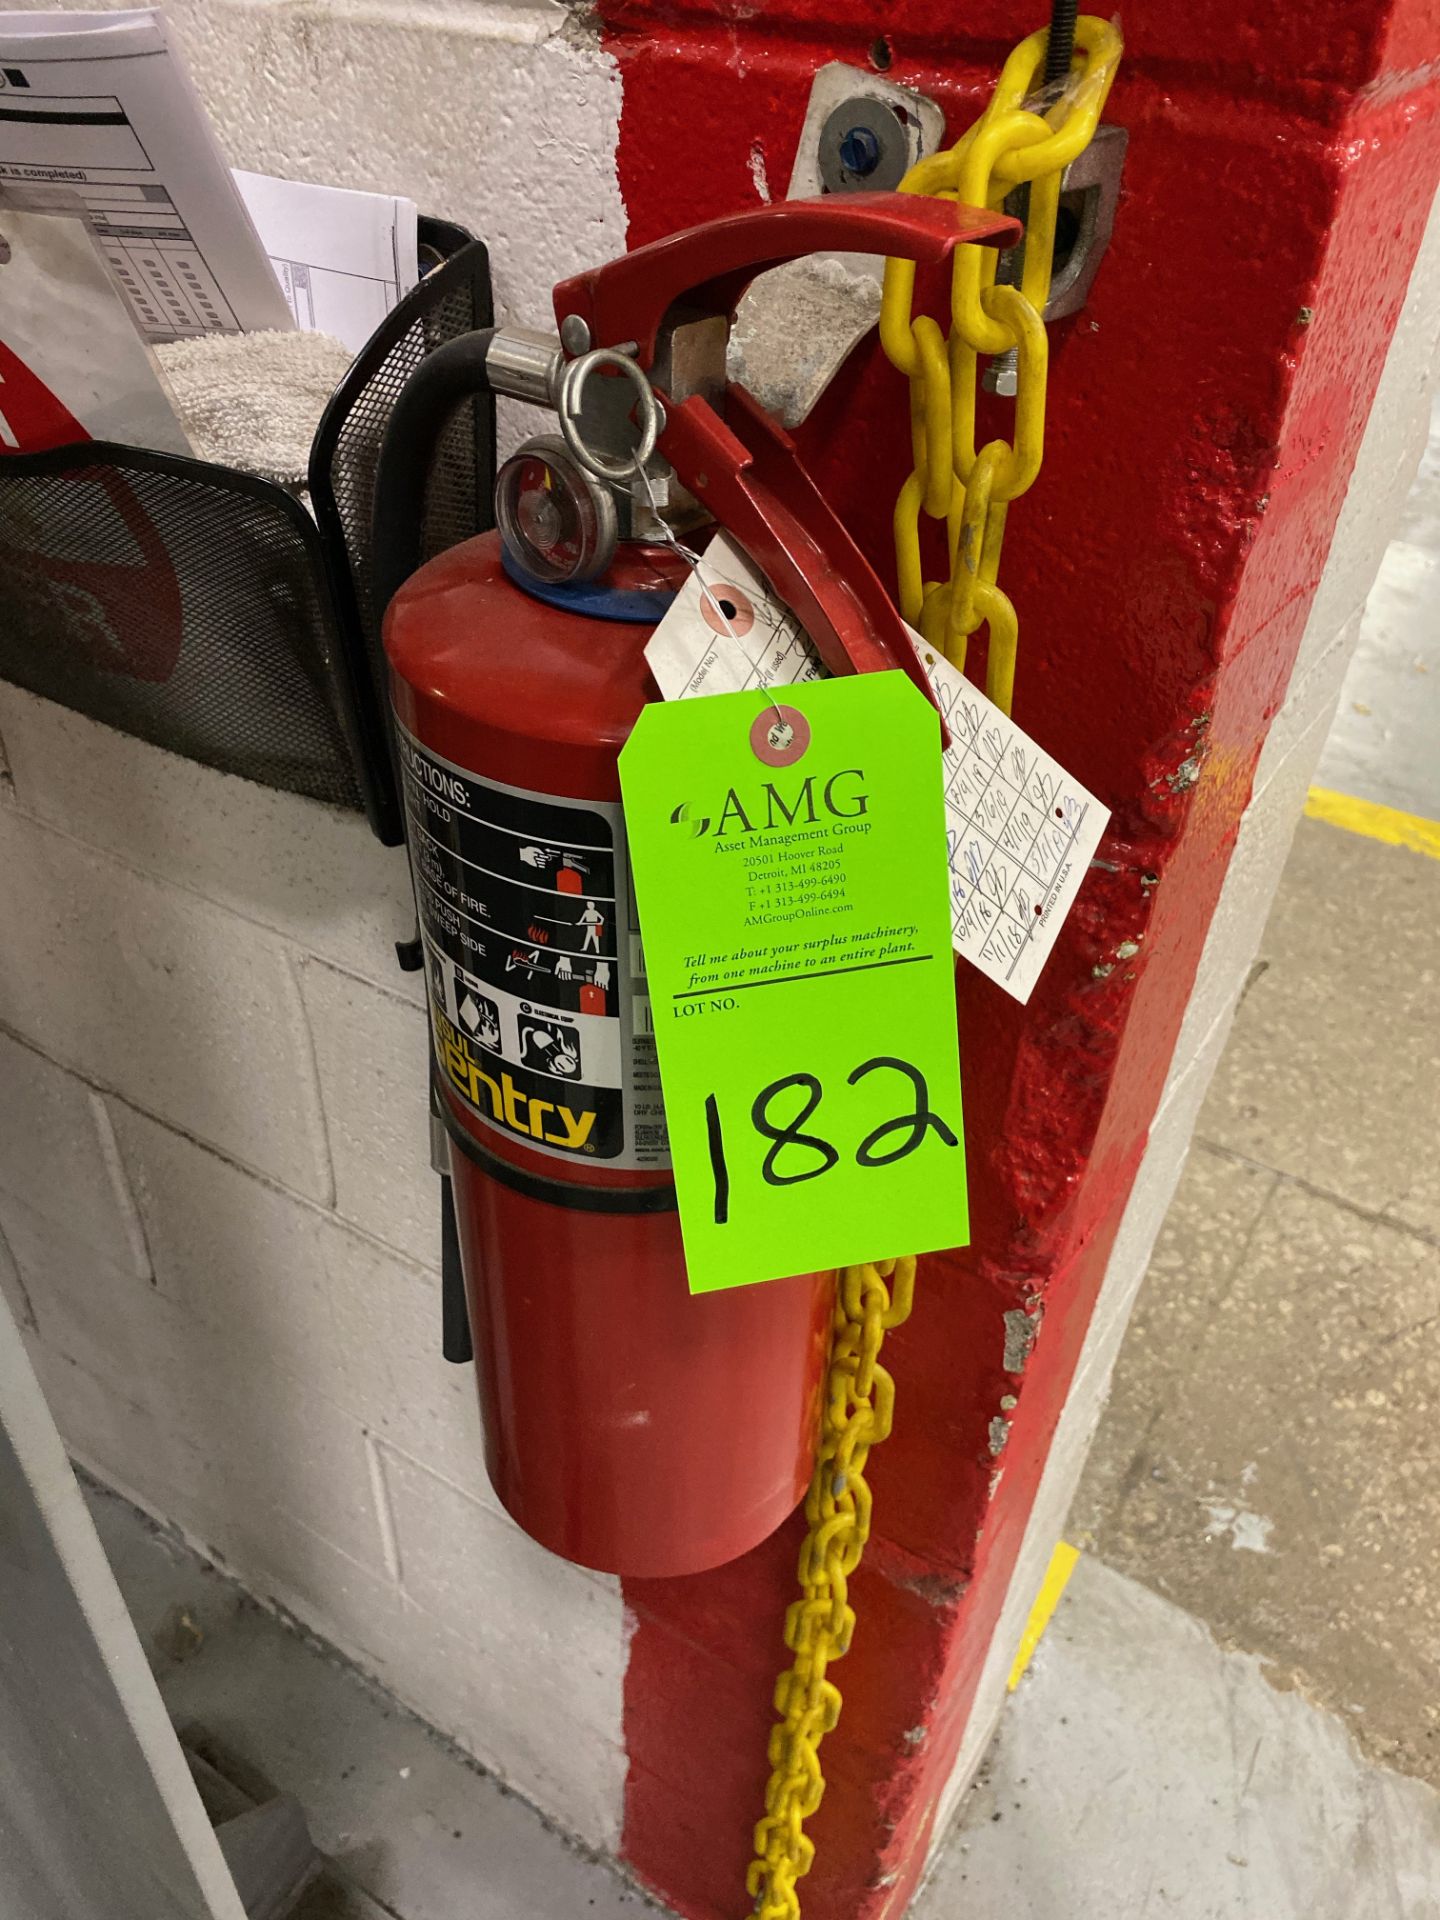 19 fire extinguishers